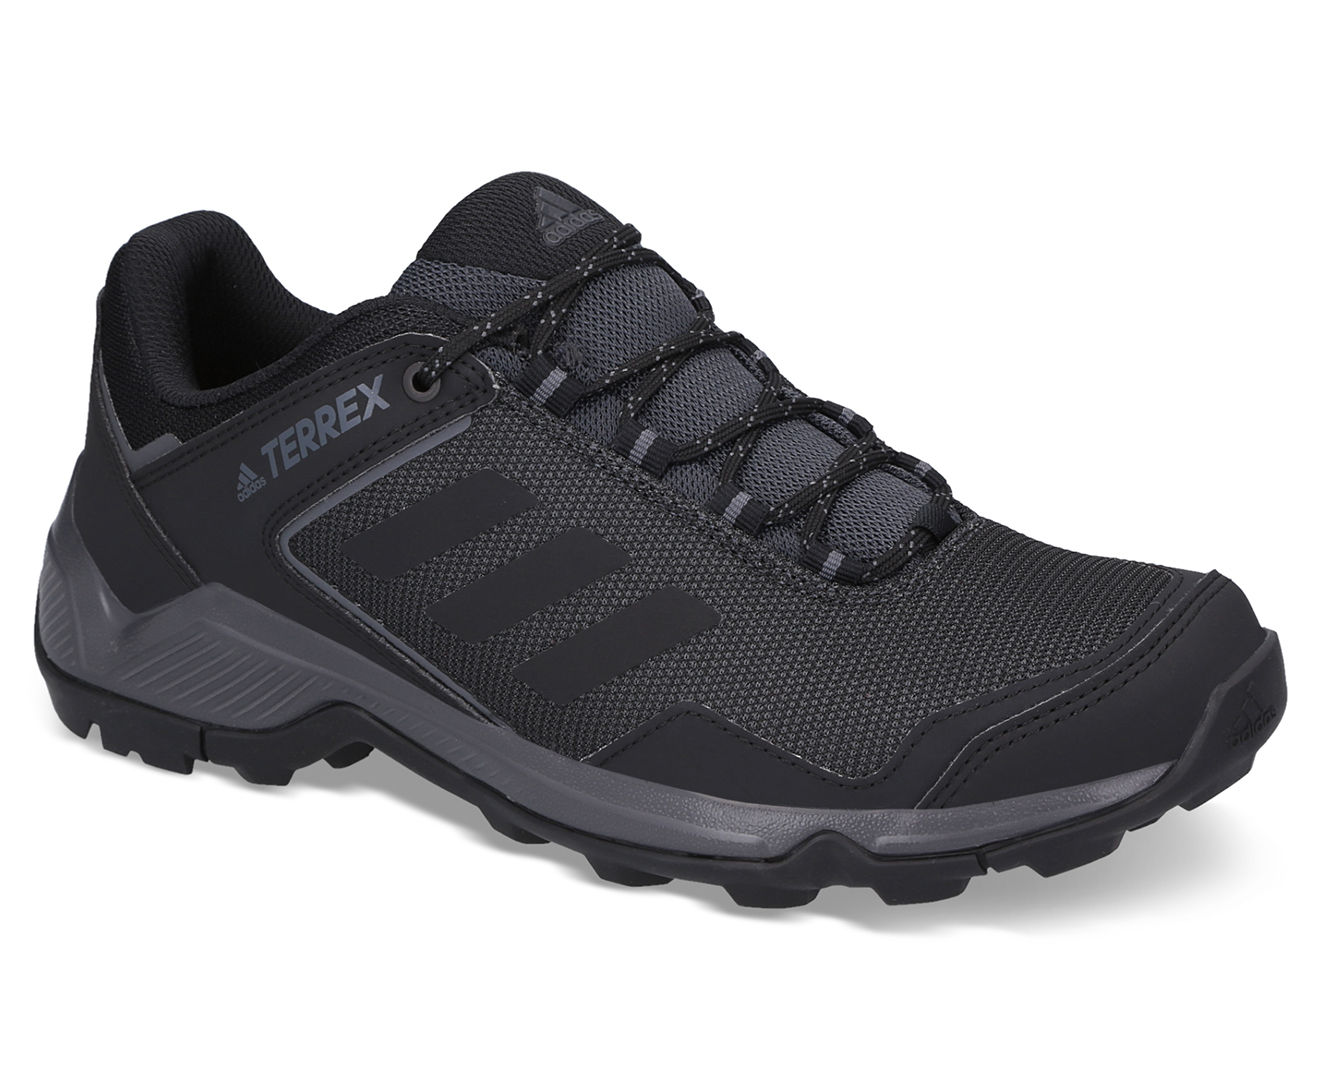 Adidas Men's Terrex Hiking Shoes - Black/Grey | Catch.com.au